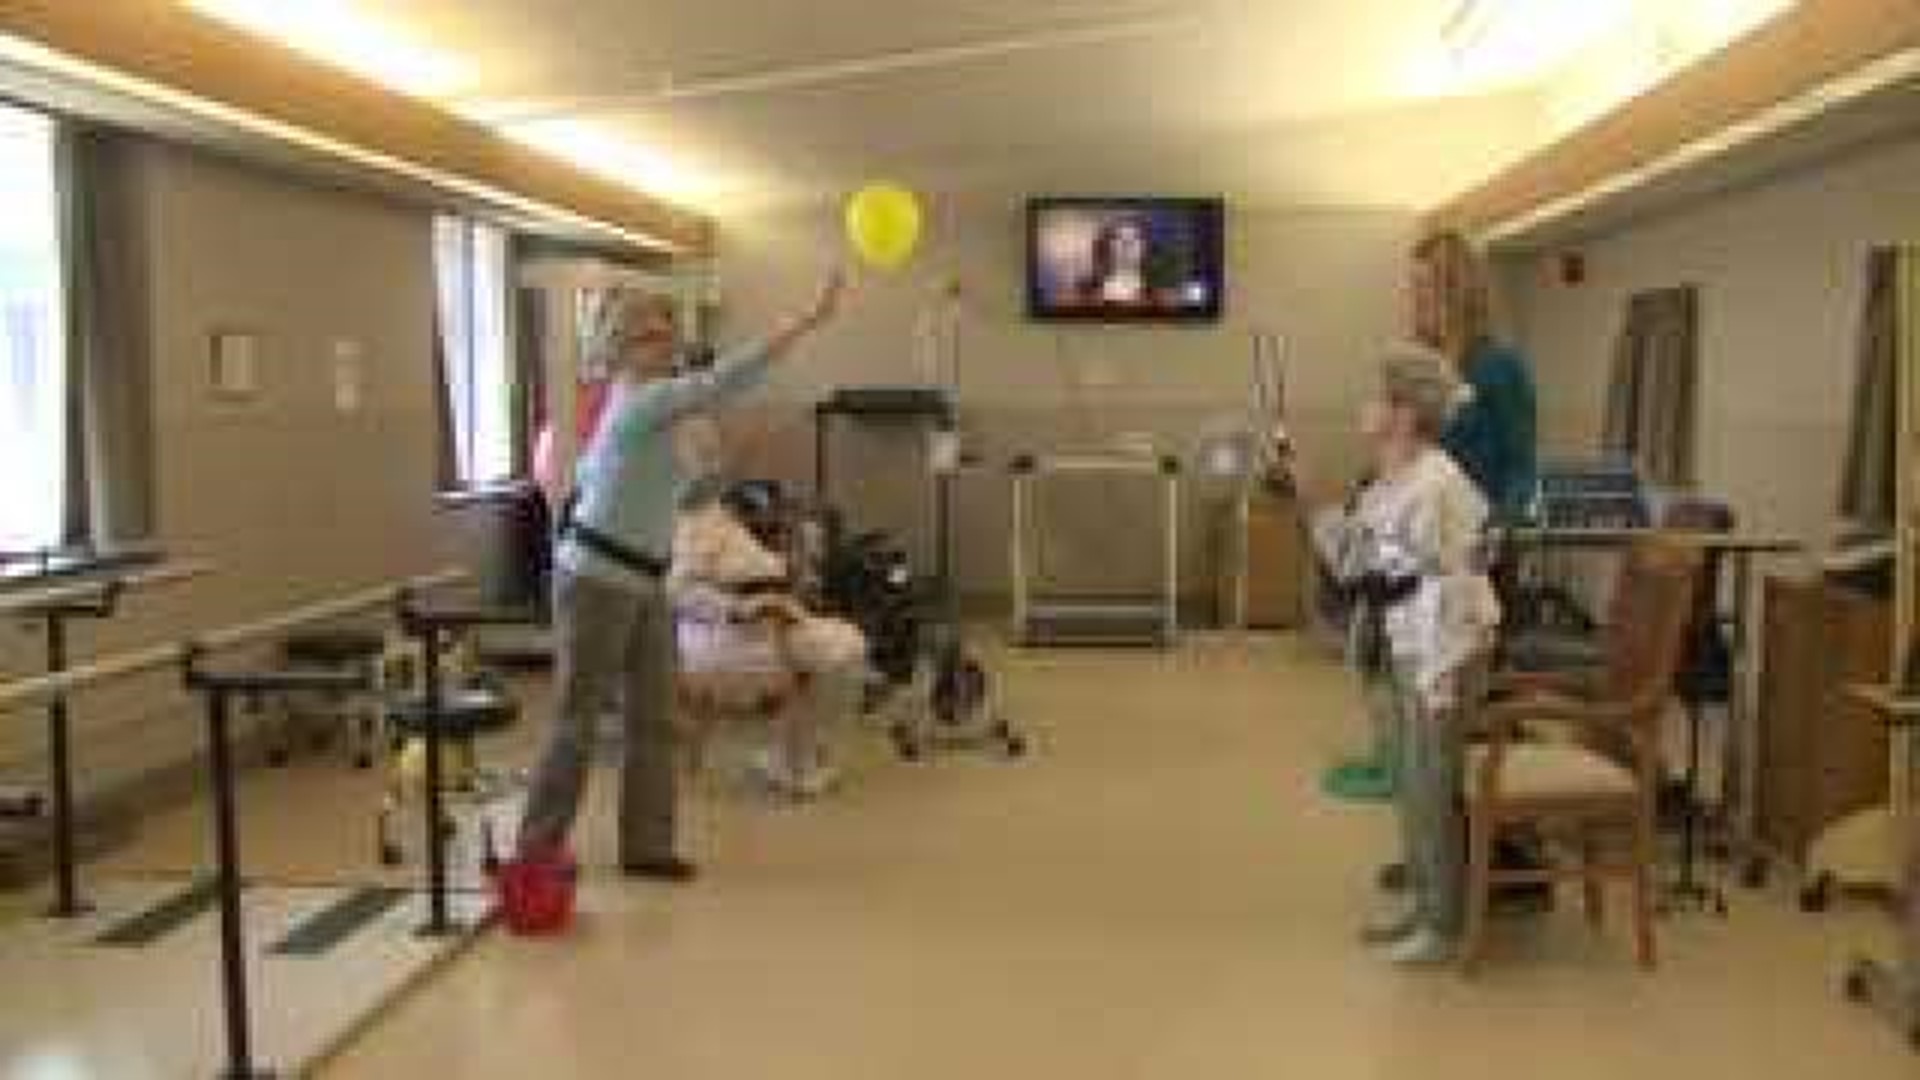 Knox County Nursing Home succeeding with fresh philosophy